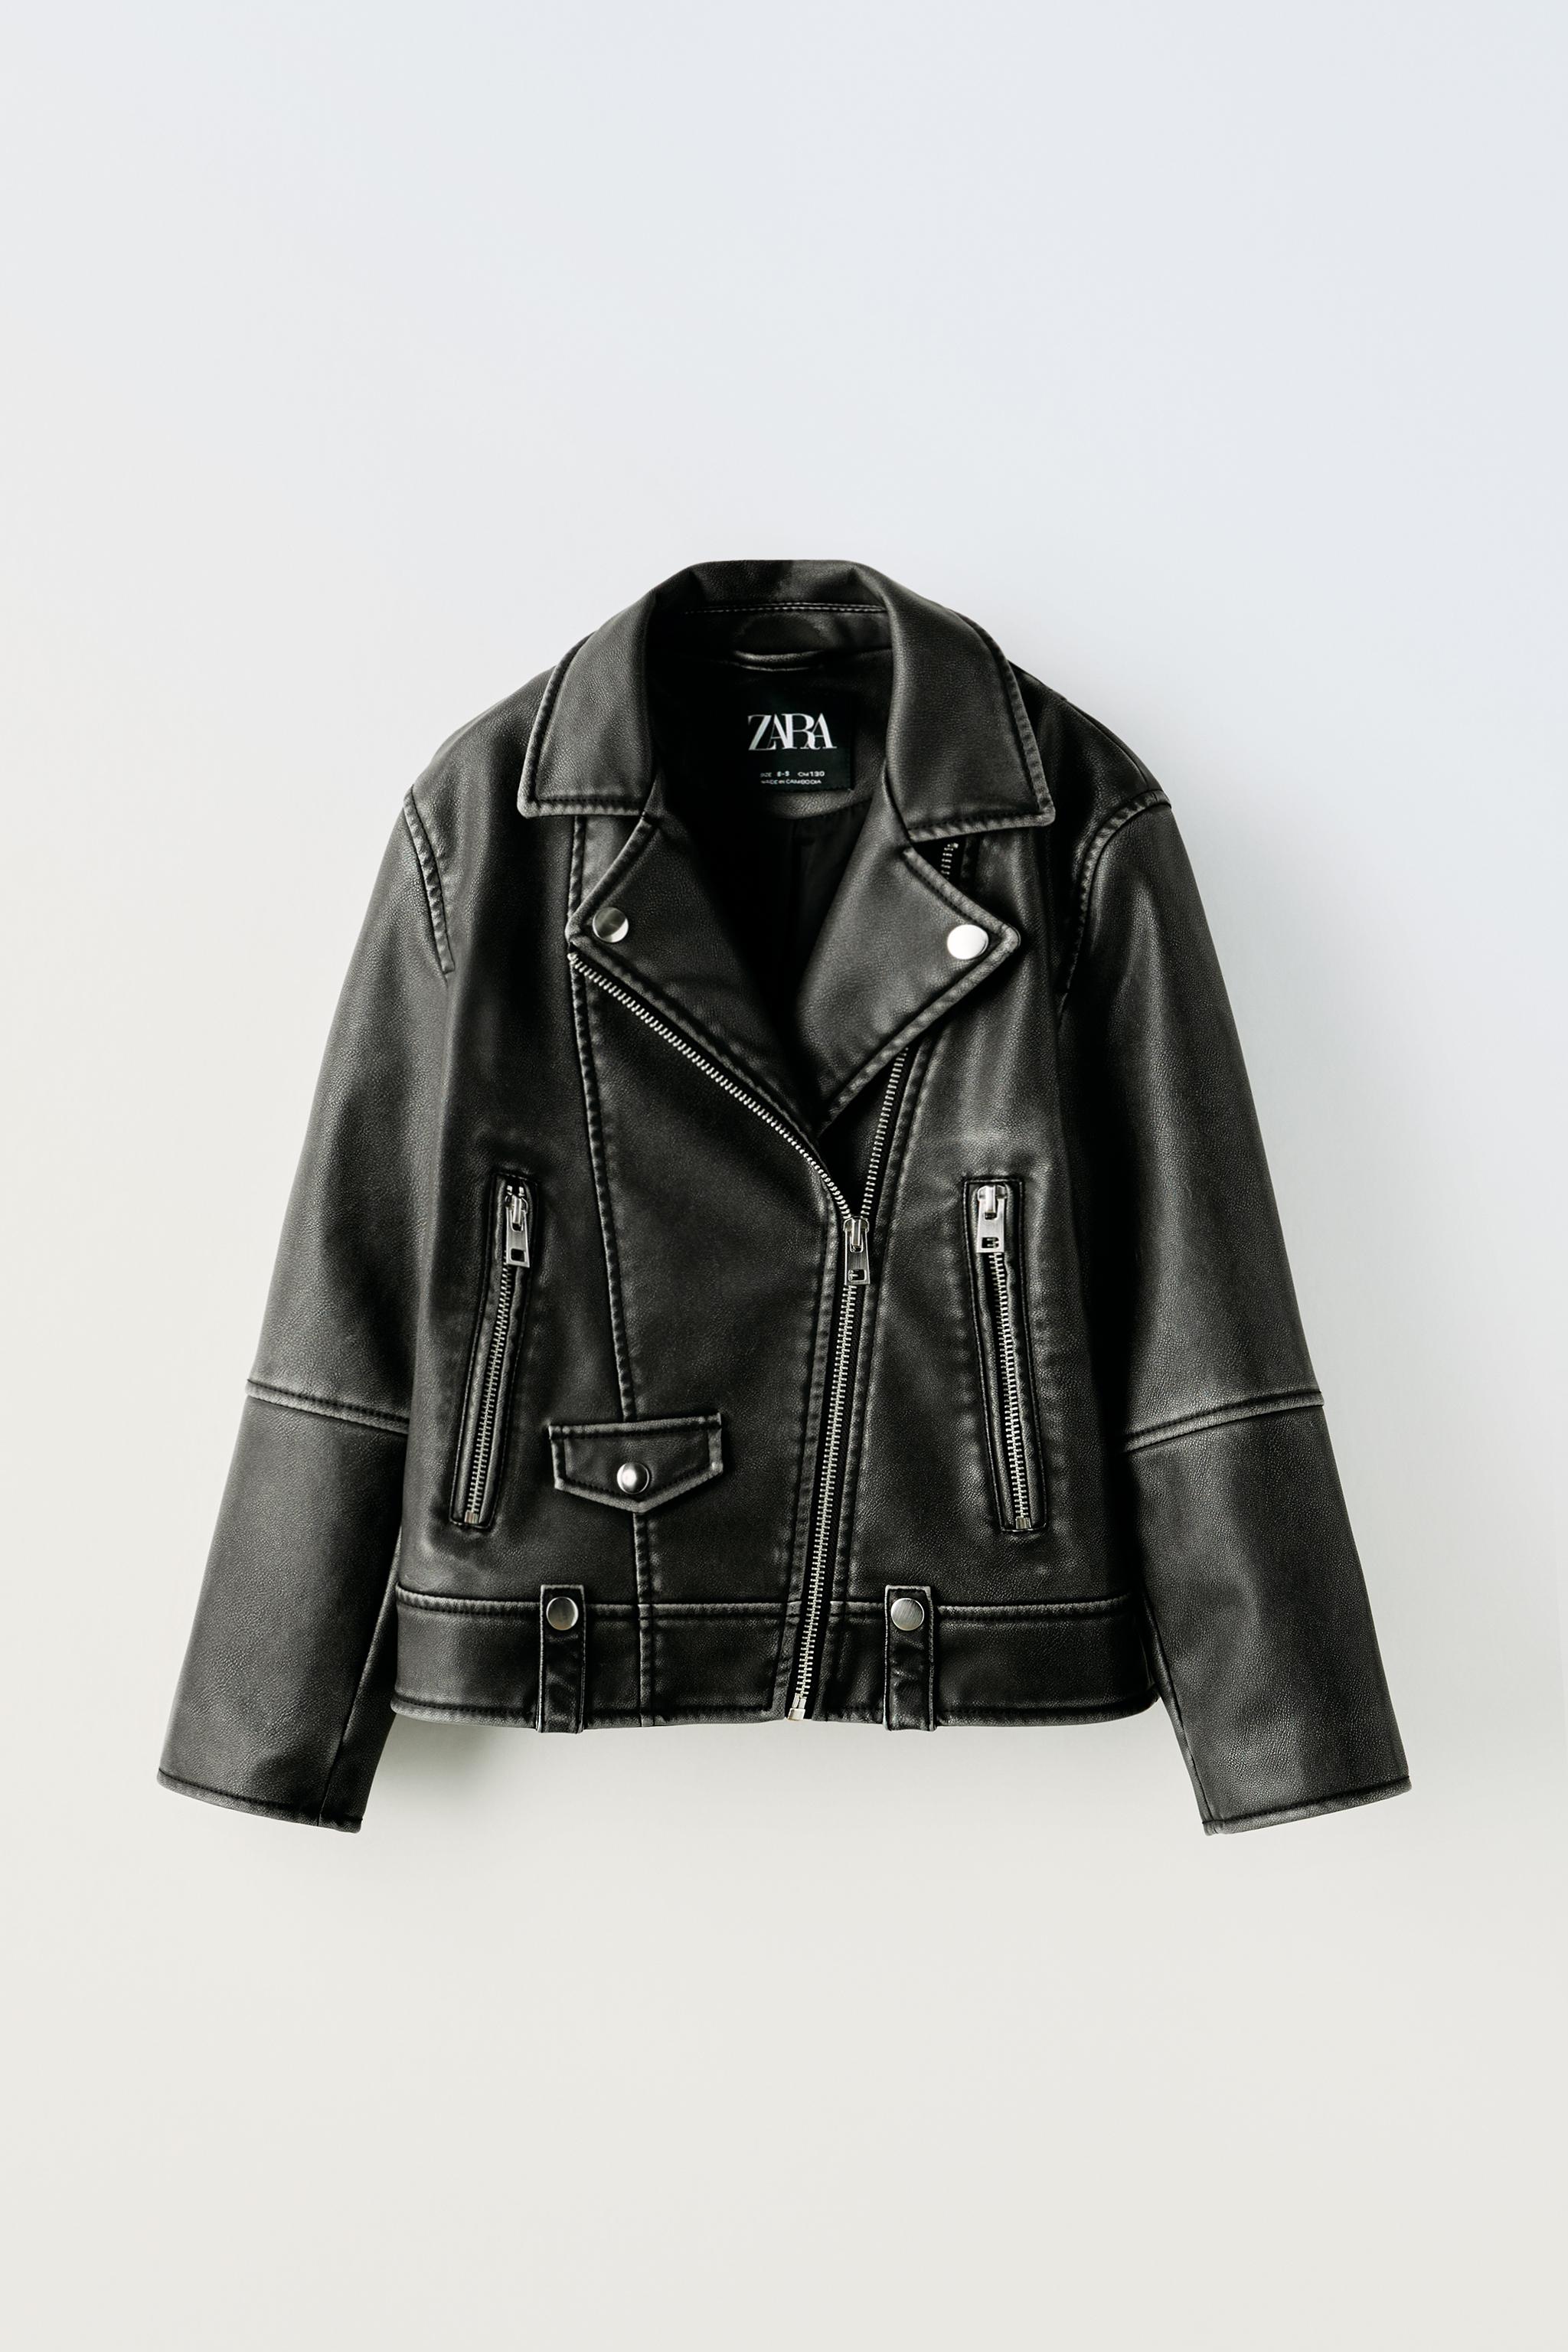 Topshop faux leather varsity contrast sleeve bomber jacket in black